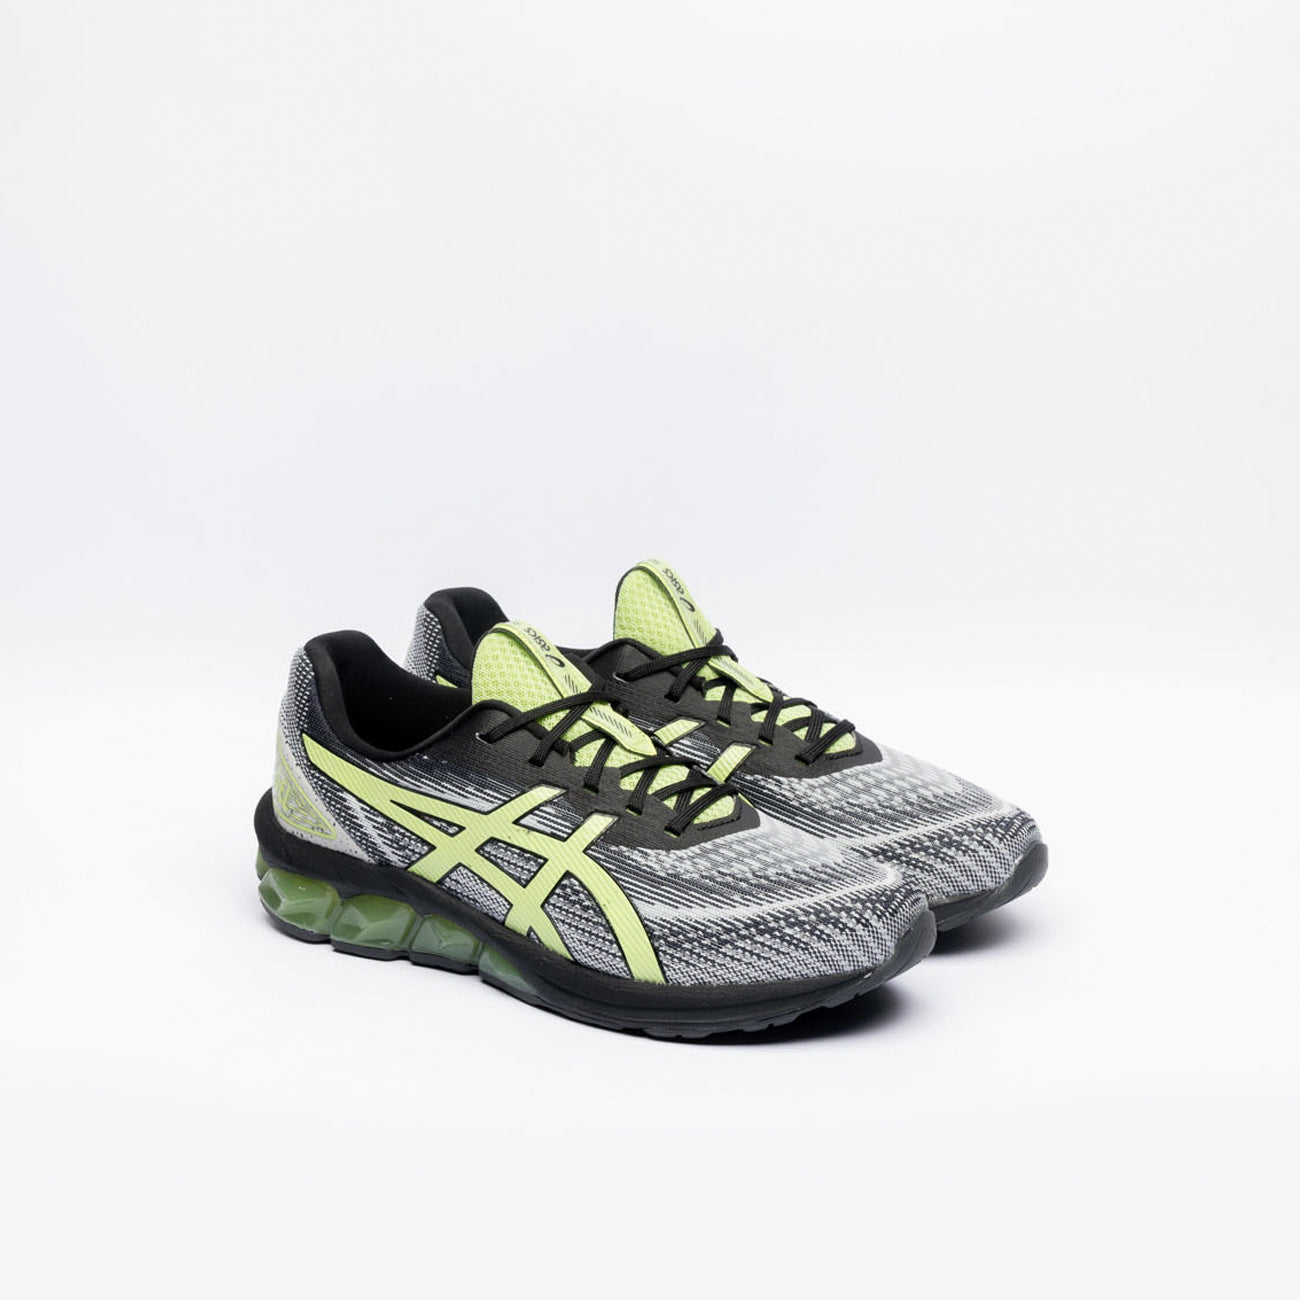 Sneaker running Asics Gel Quantum 180 VII in tessuto nero e gel verde